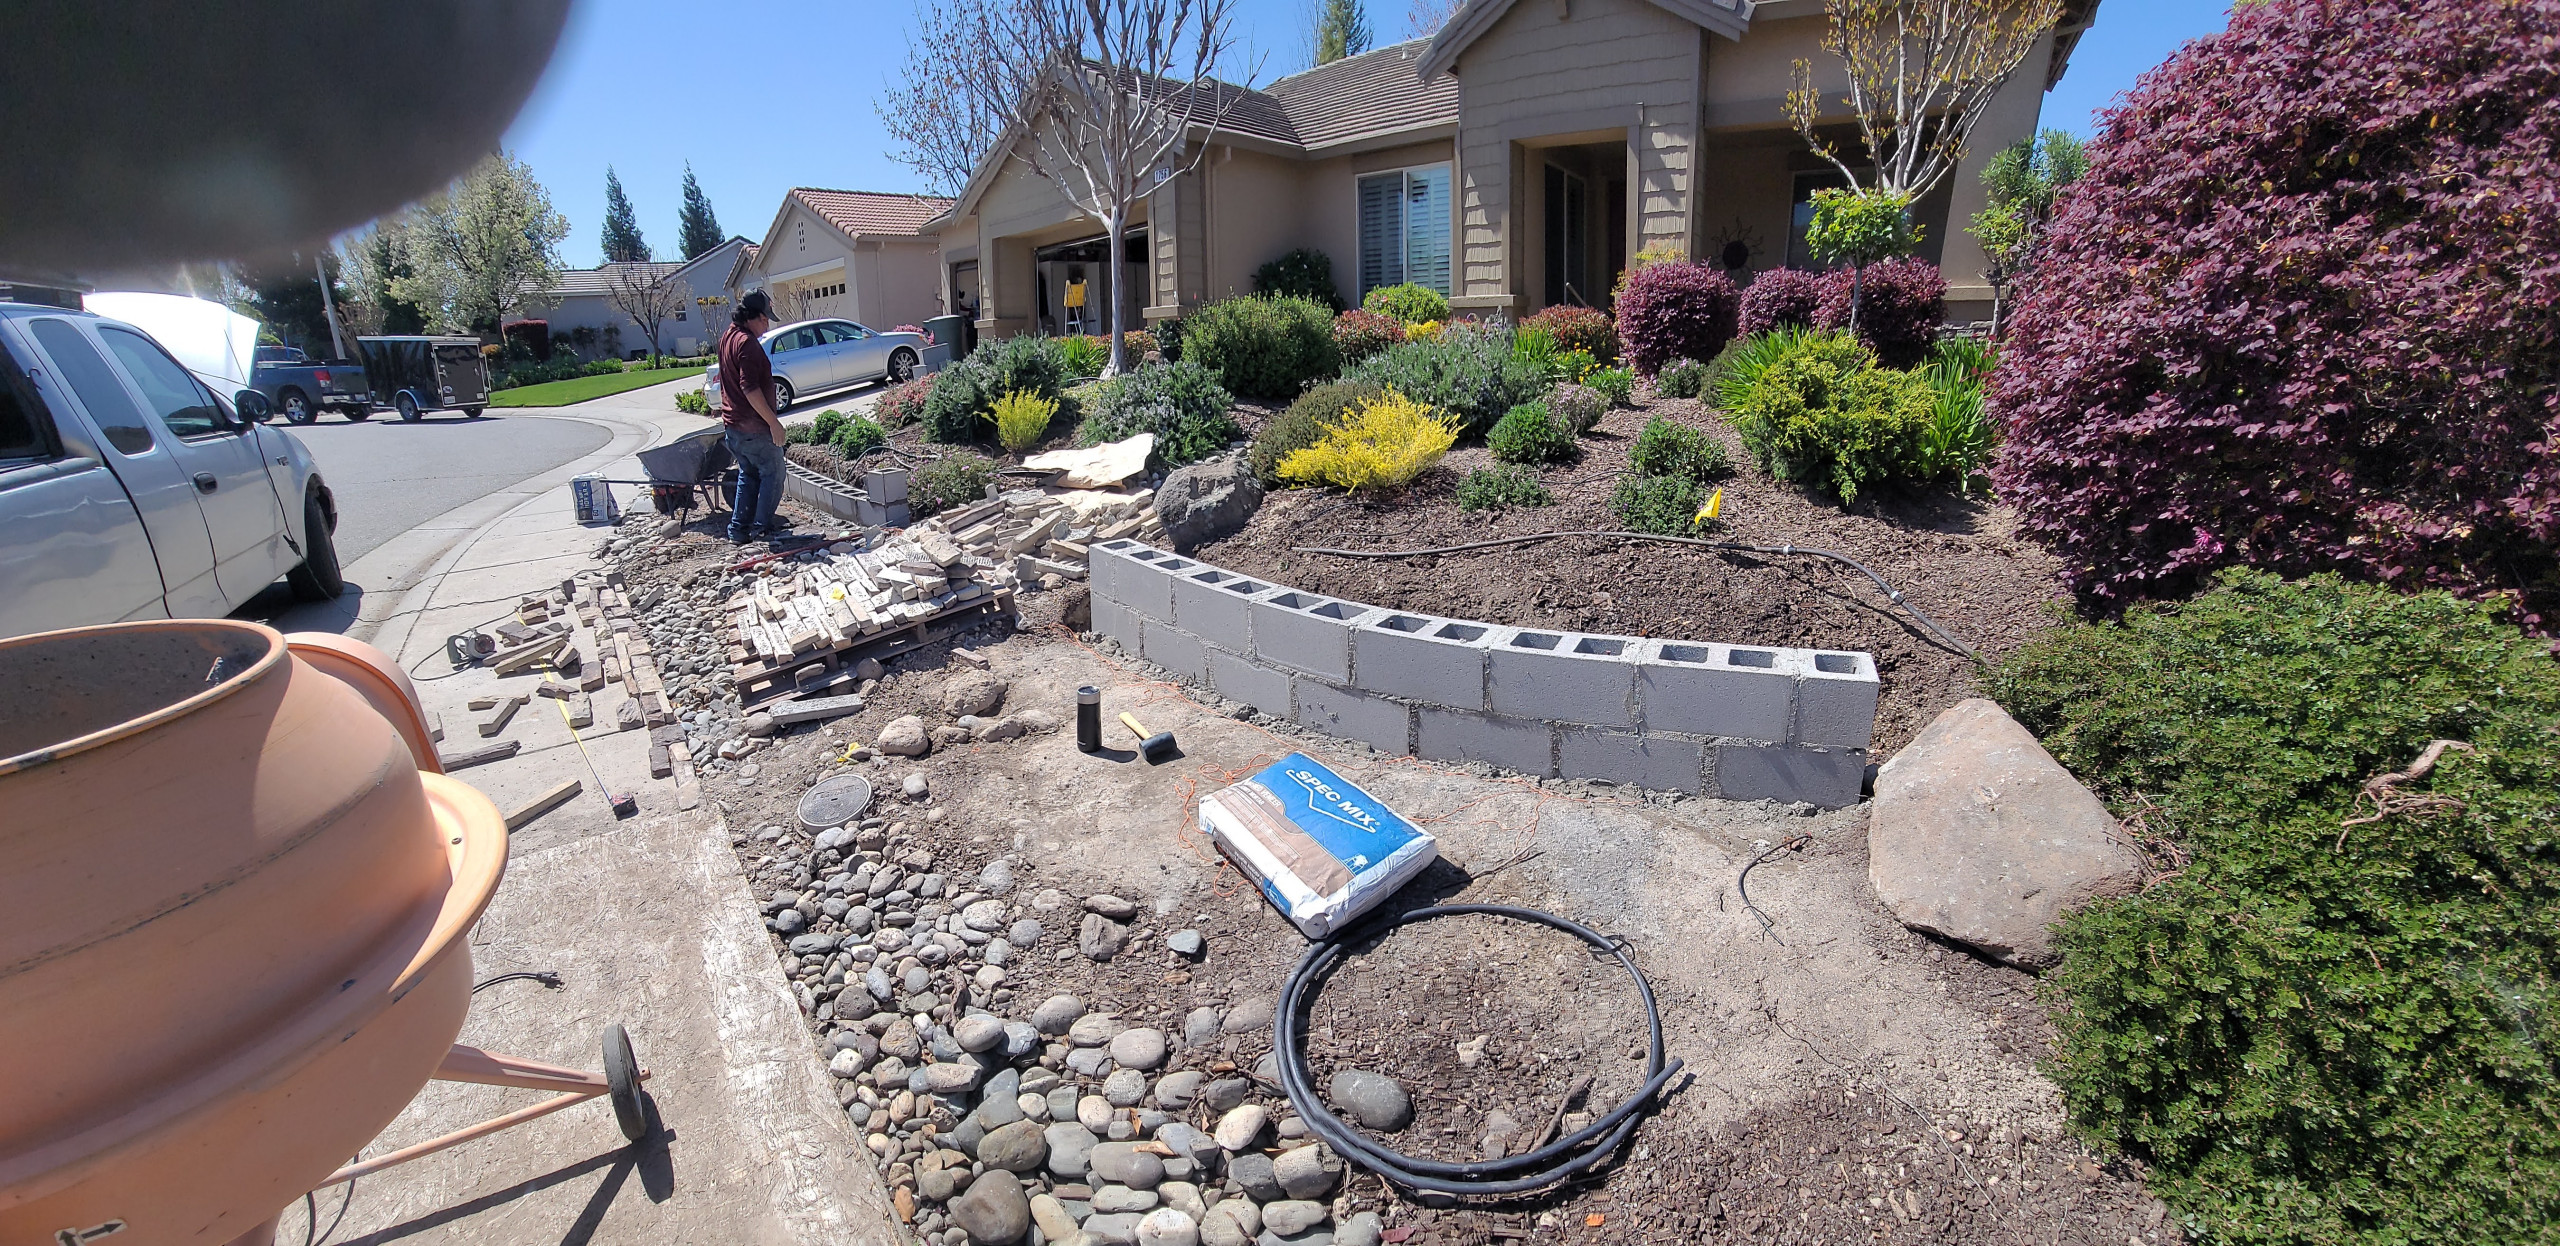 Outdoor Irrigation Installation and Retaining Wall